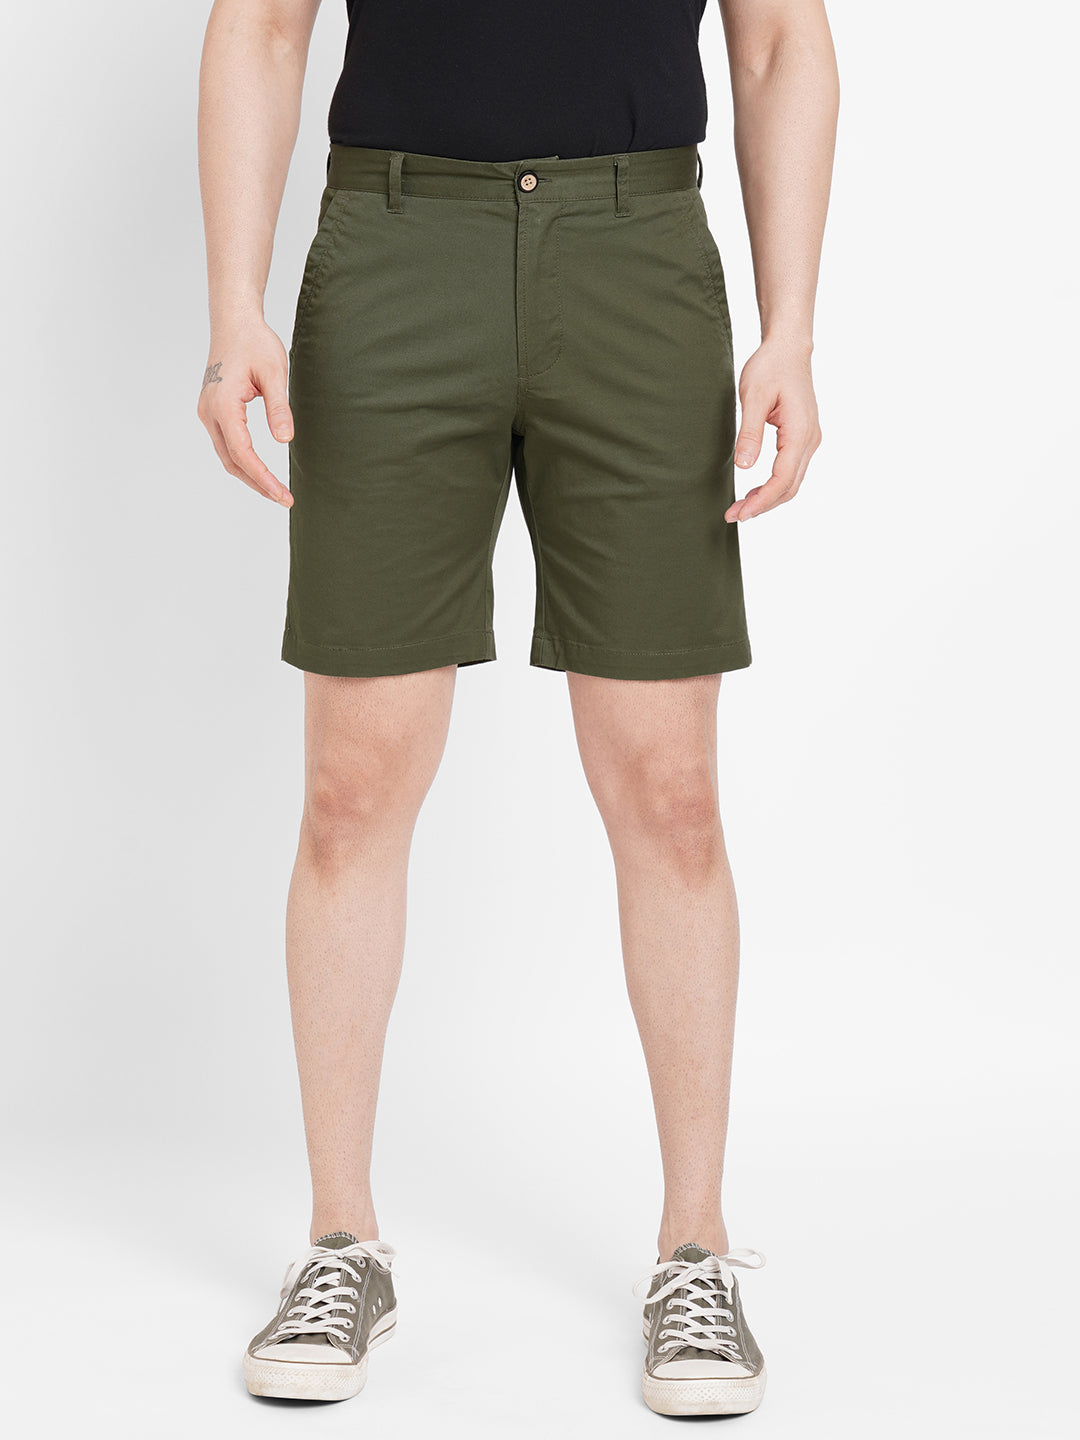 New Ladies Plain 3/4 Length Short Trousers Casual Wide Leg Culottes Pants  8-26 | eBay